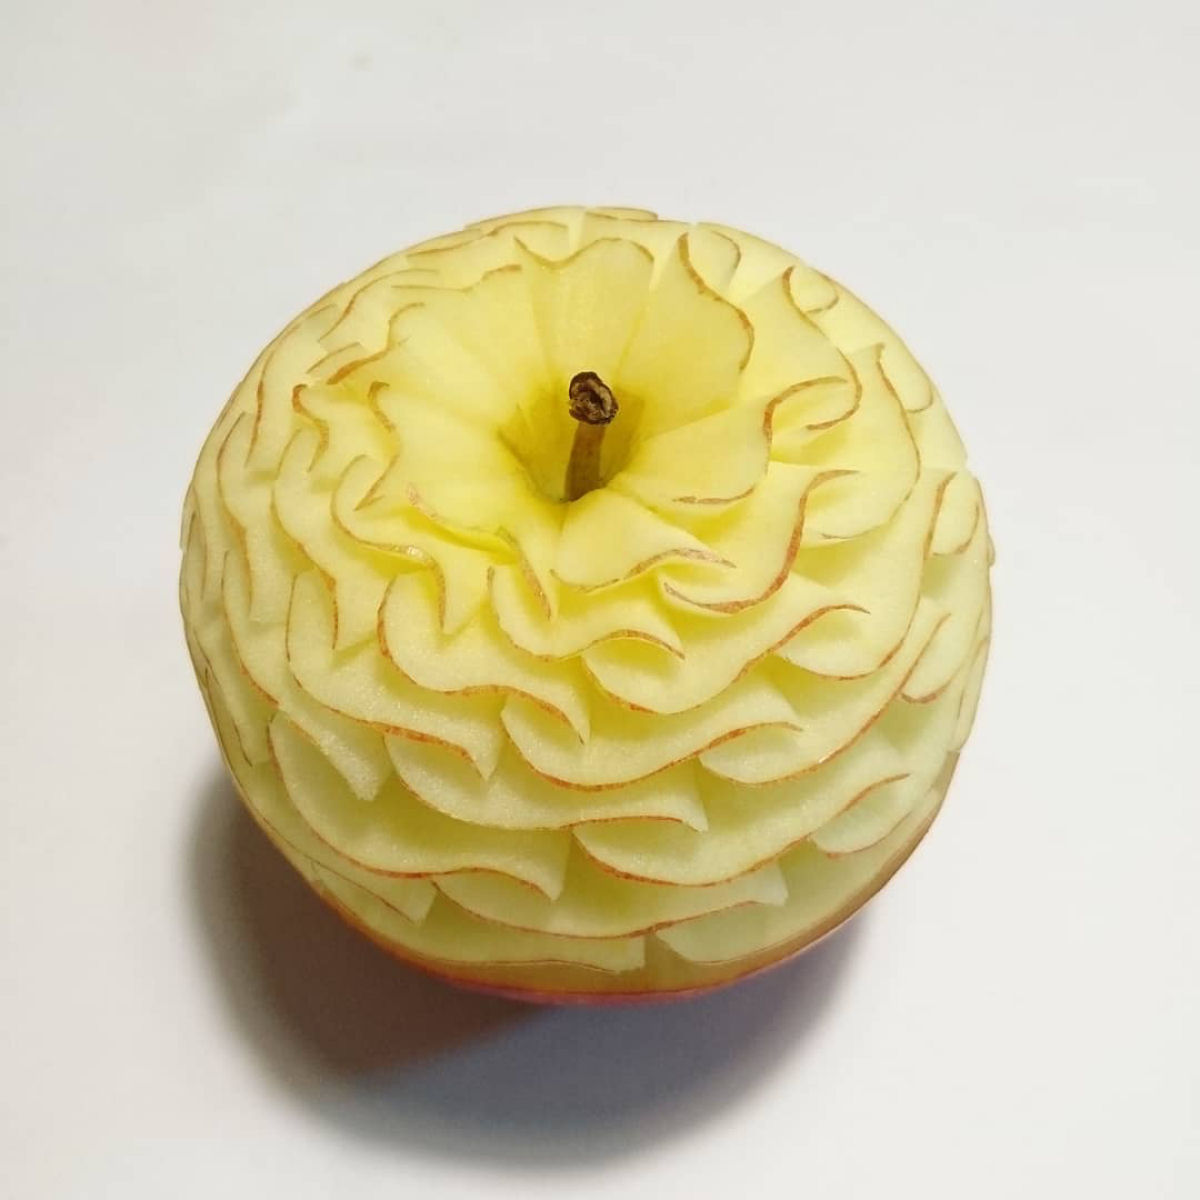 Escultor japons transforma frutas e legumes  em esculturas comestveis brilhantes 16